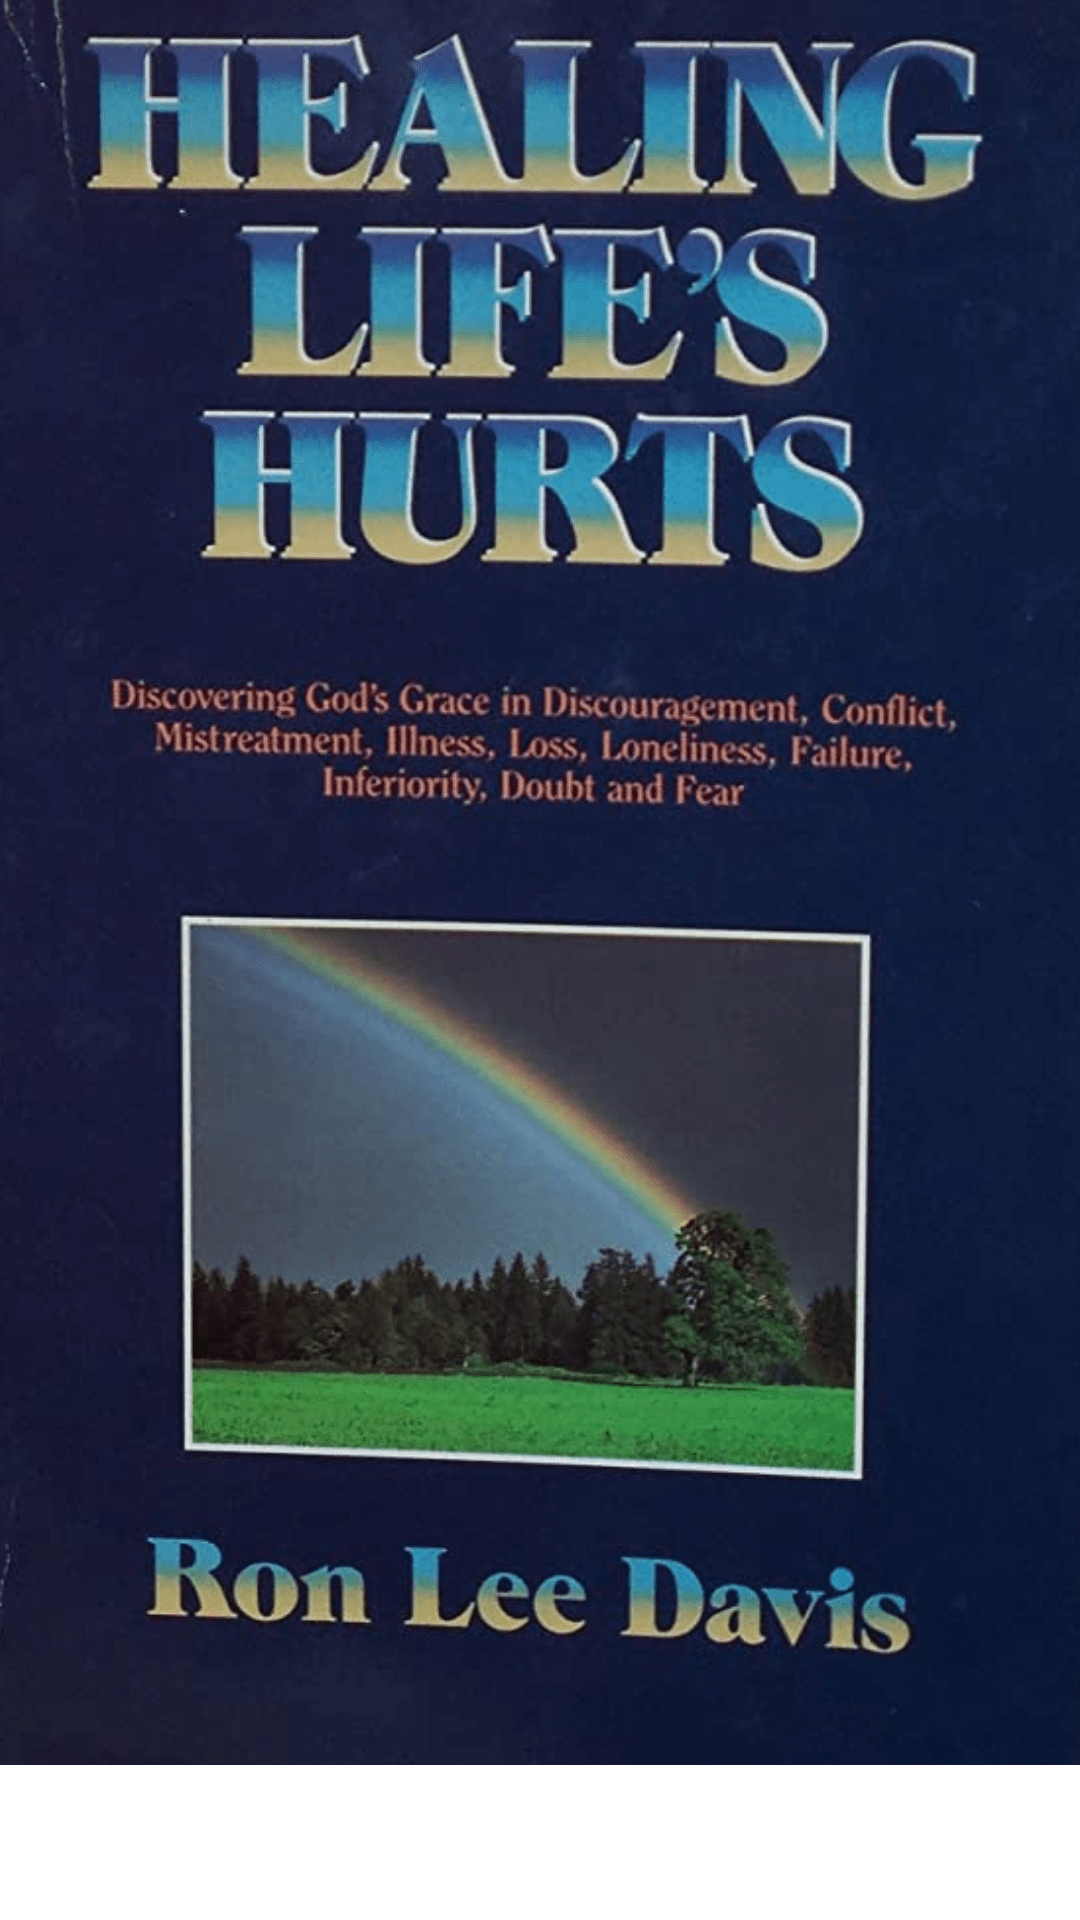 Healing Life's Hurts by Ron Lee Davis